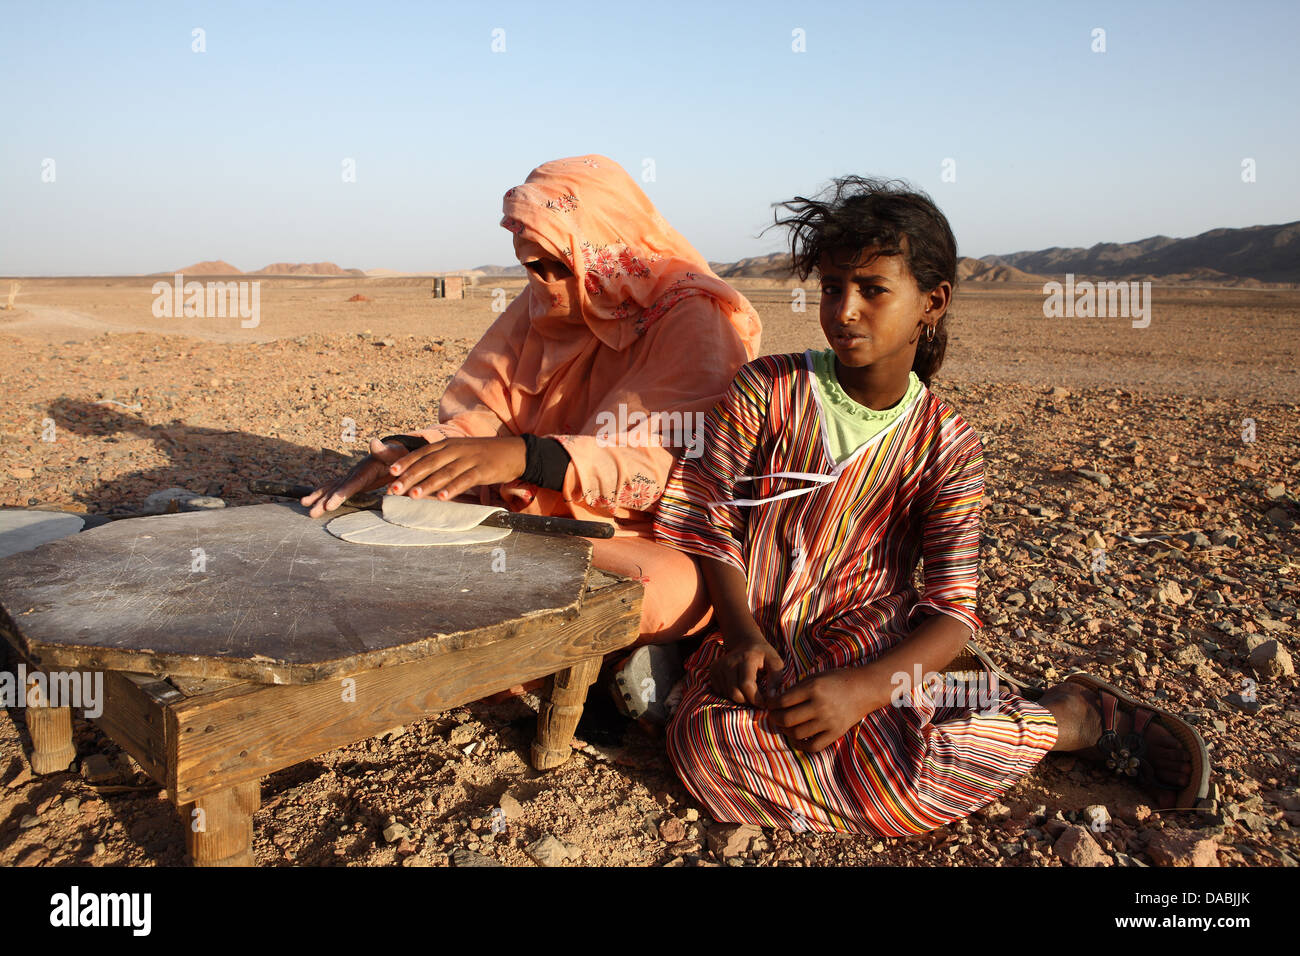 Local Bedouins prepare traditional Arab bread, Marsa Alam desert, Egypt, North Africa, Africa Stock Photo